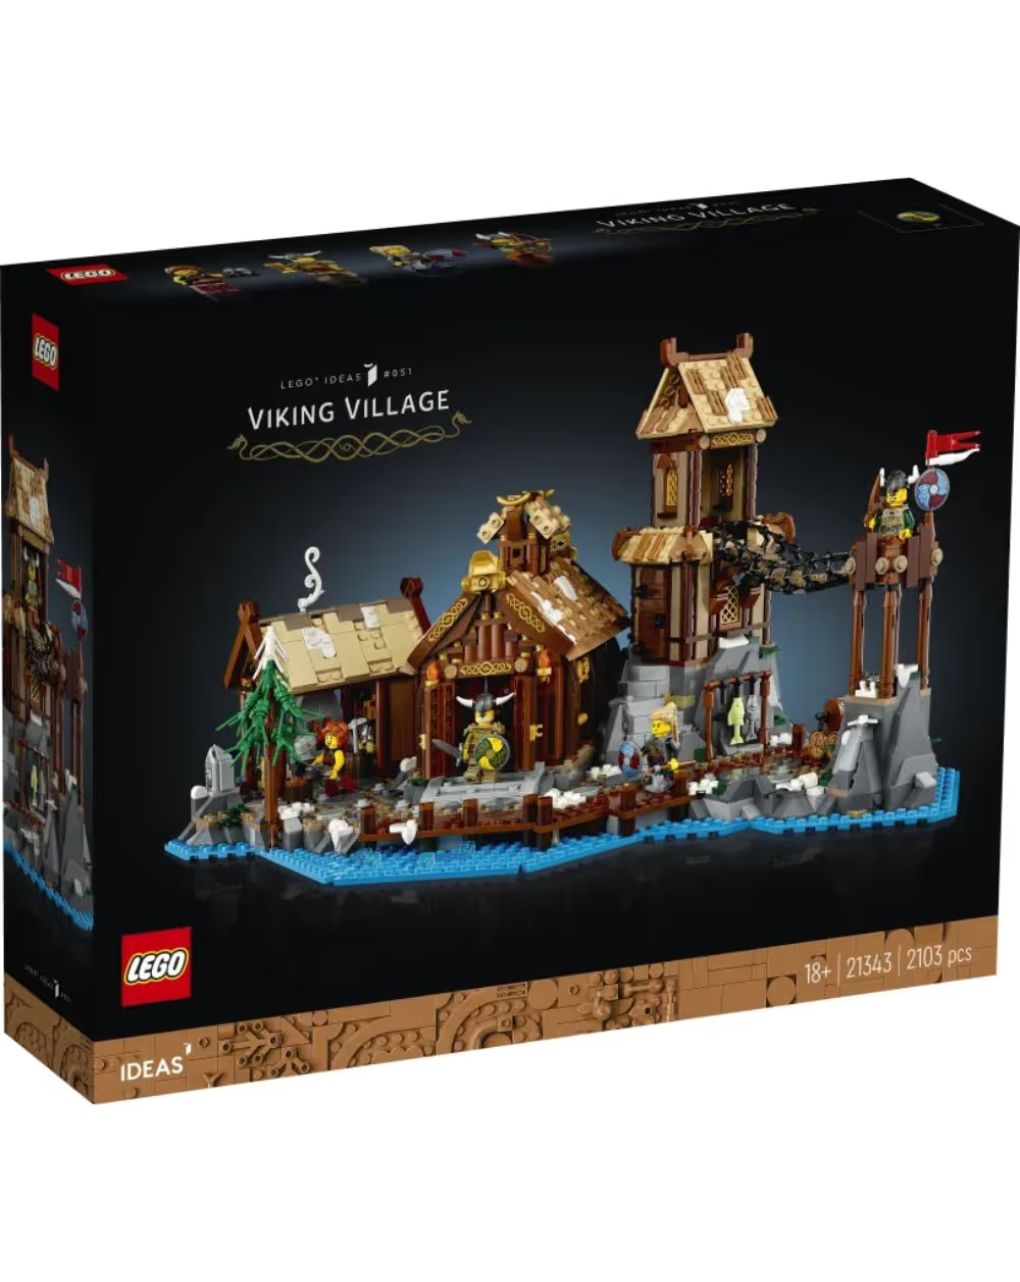 Lego ideas viking village 21343